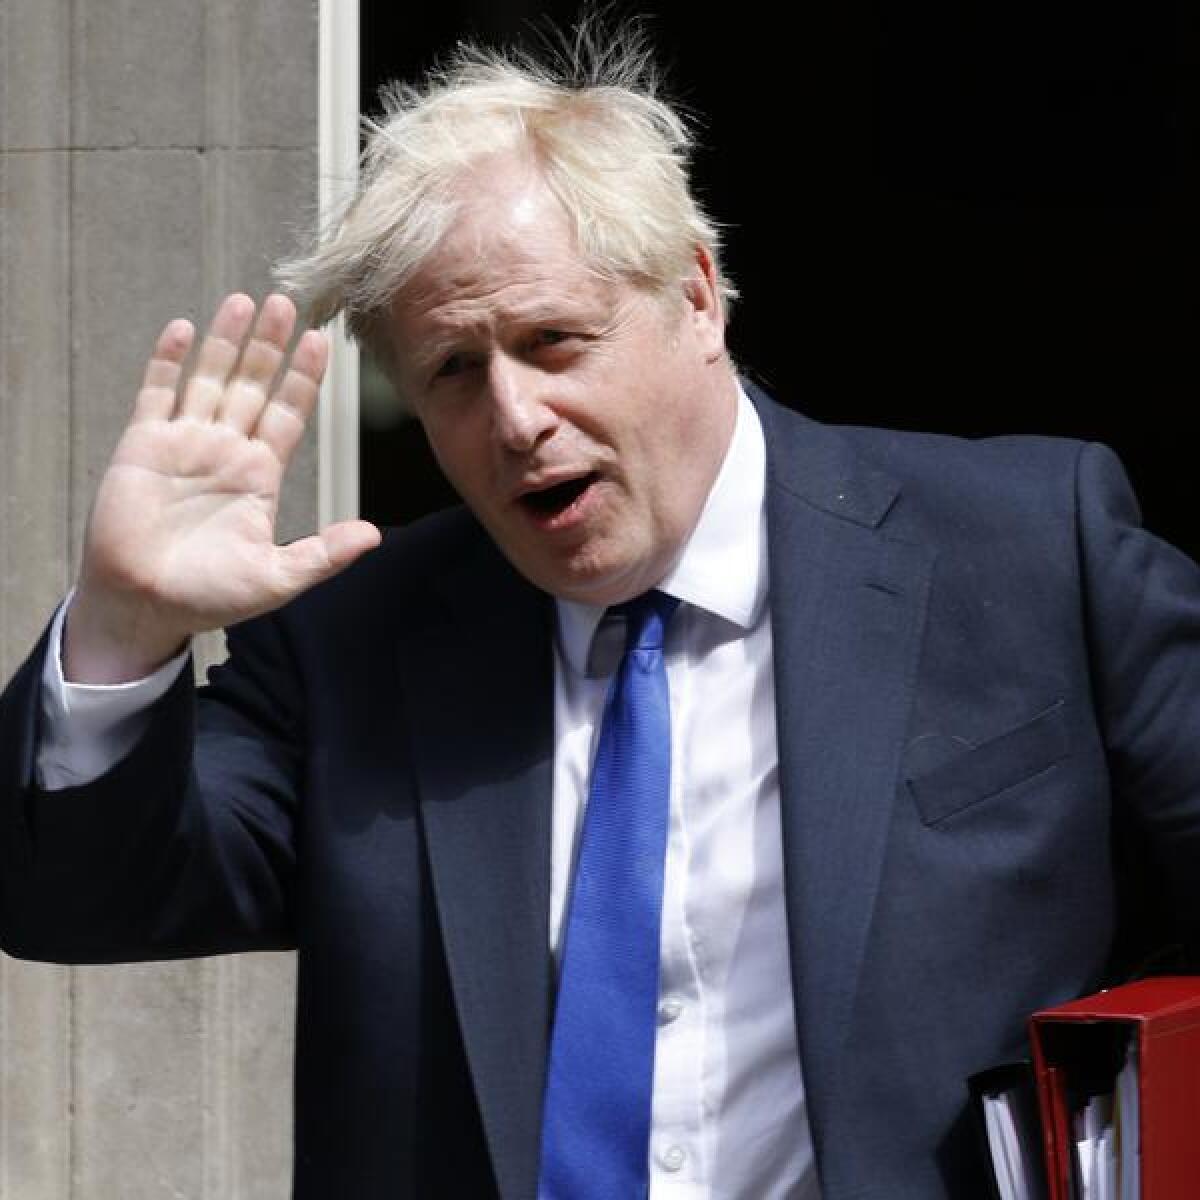 British Prime Minister Boris Johnson leaves 10 Downing Street.